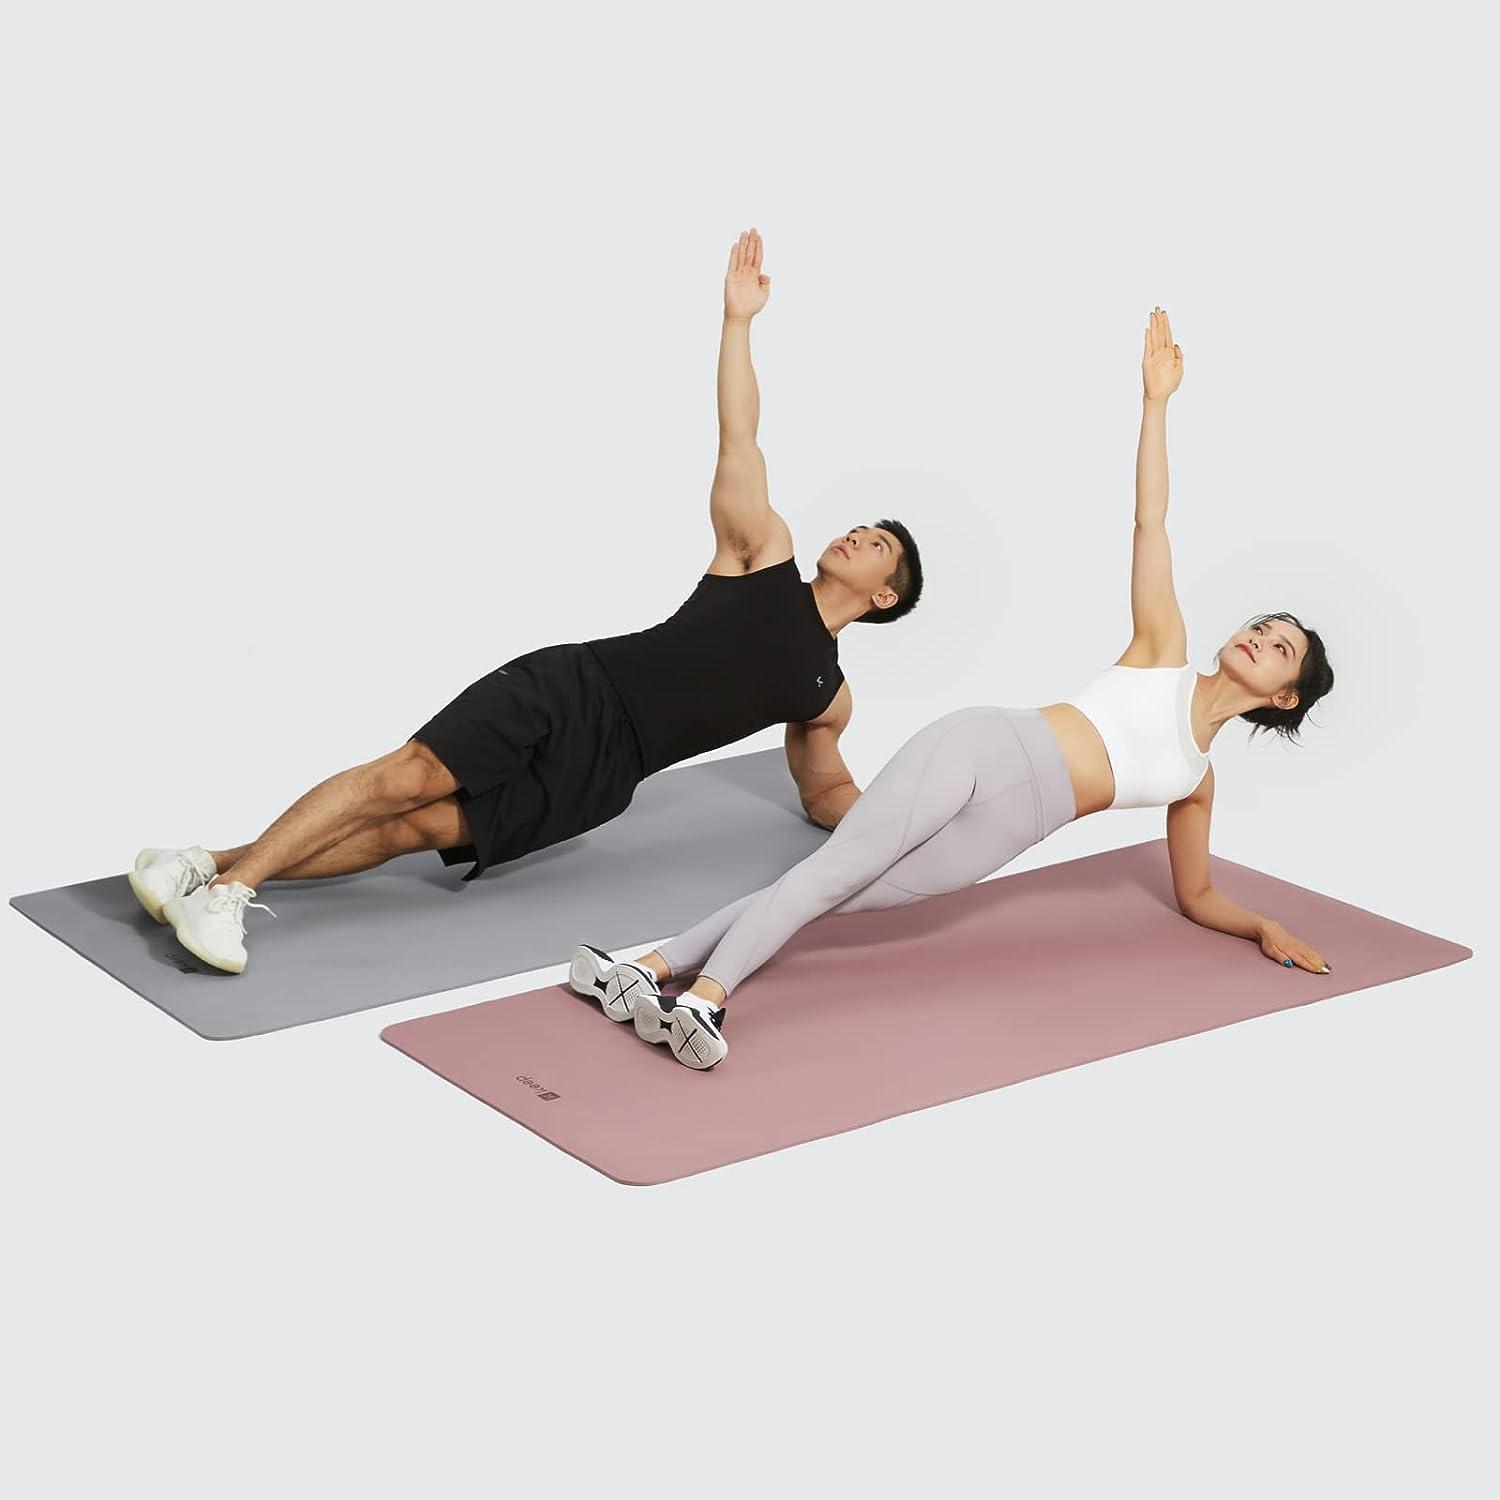 Yoga Exercise Mat Thick Non-Slip Gym Workout Pilates Mat 